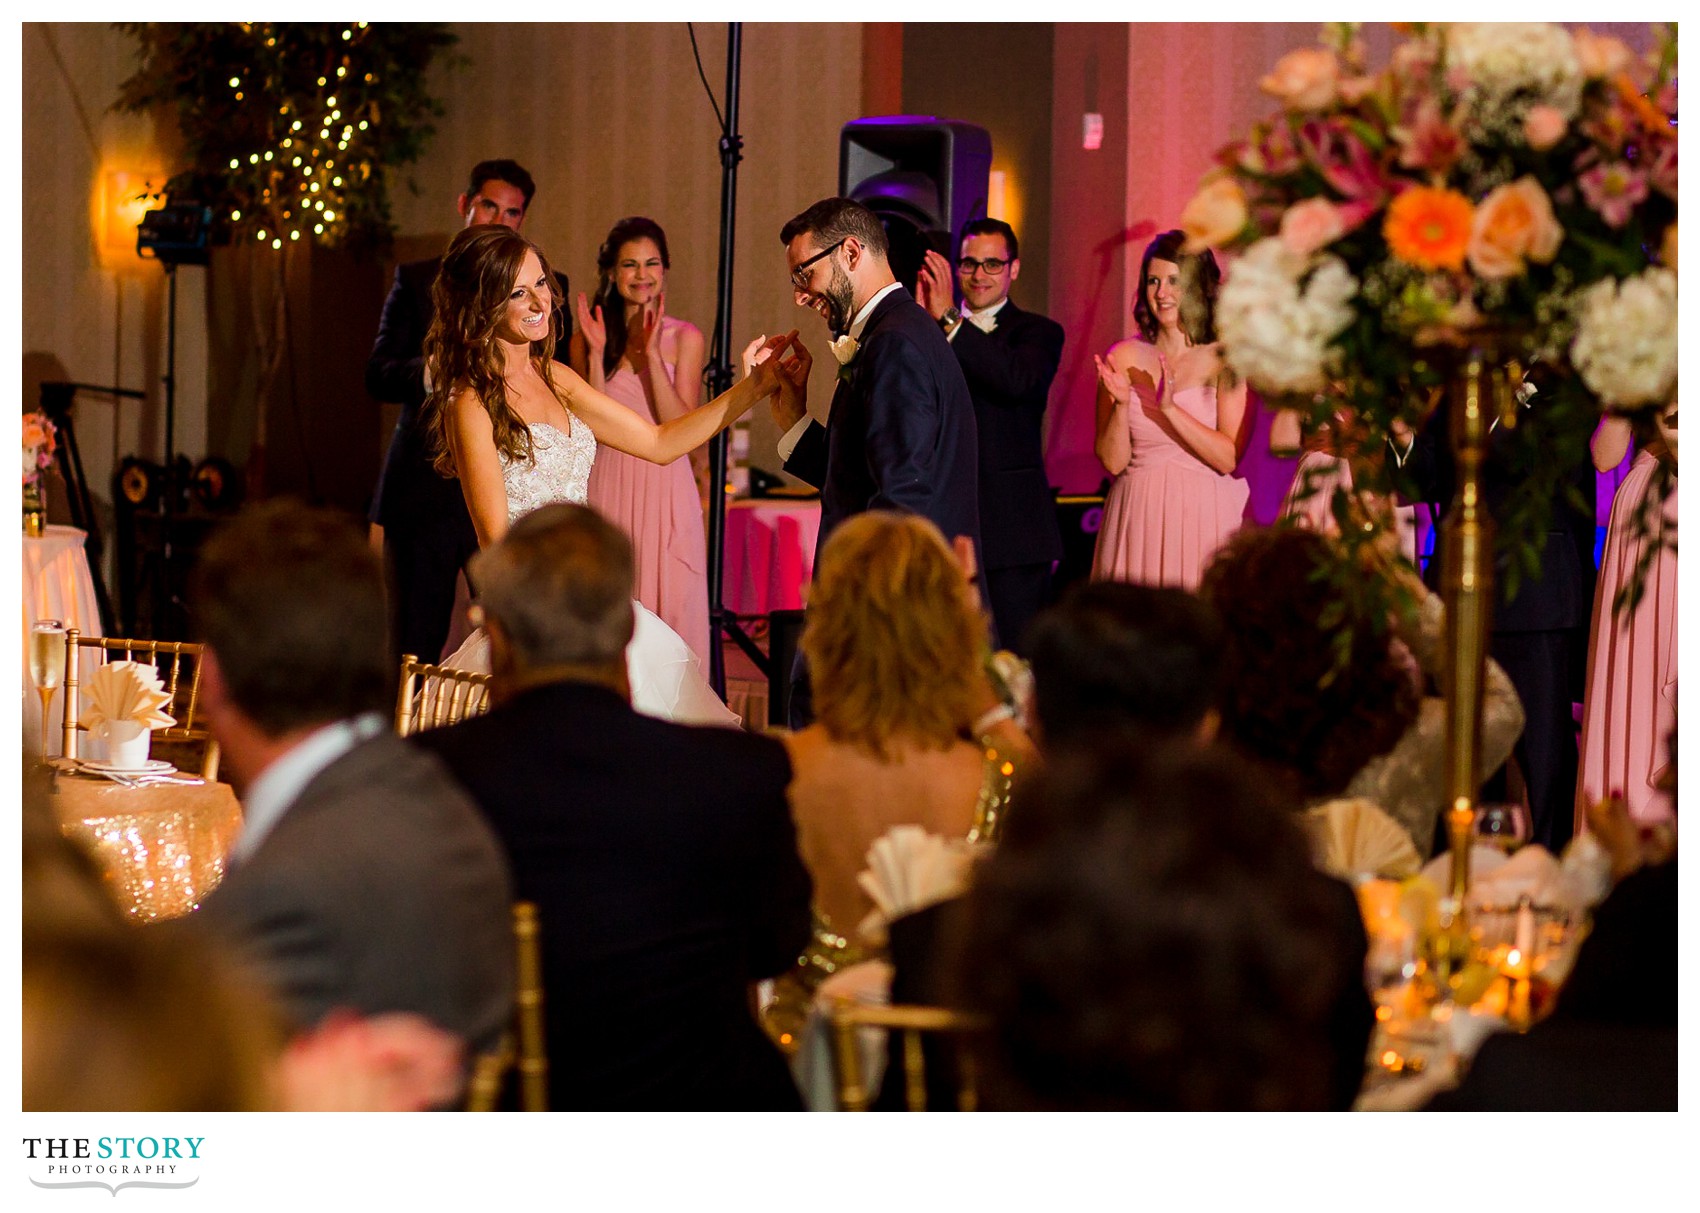 photos at Watkins Glen Harbor Hotel wedding reception